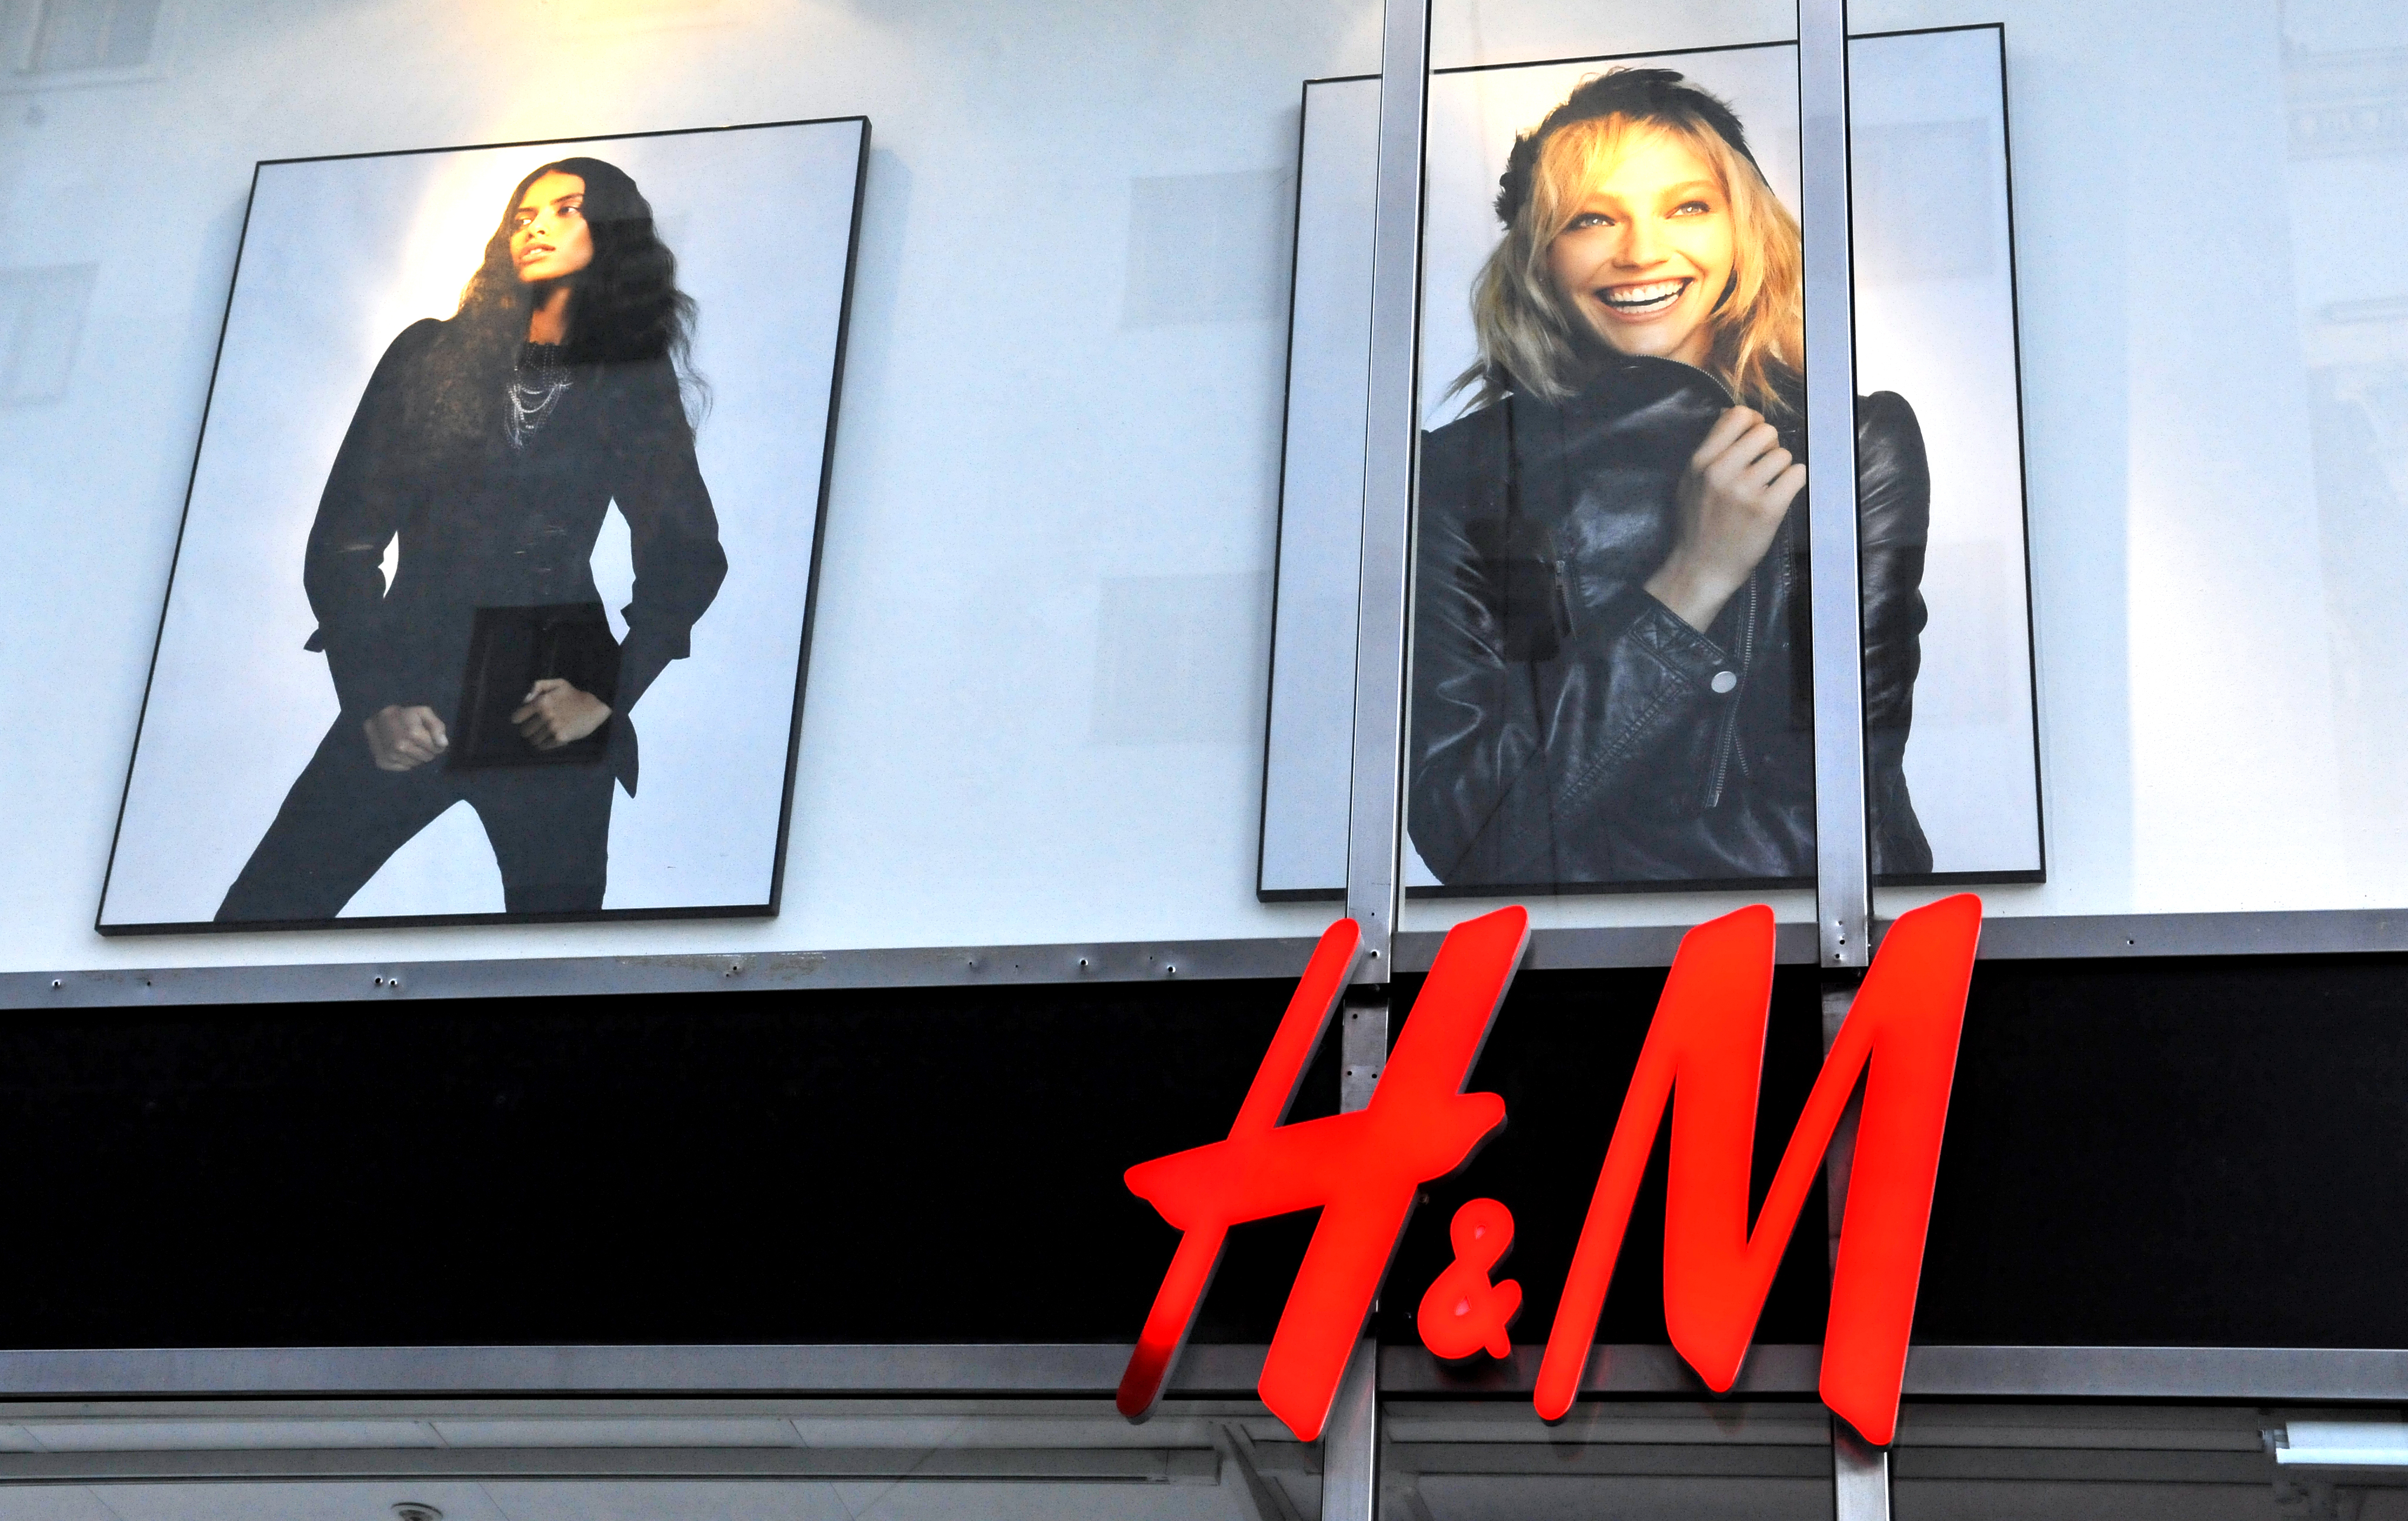 HM Hennes Mauritz, Butik, Zara, Konkurrens, Shopping